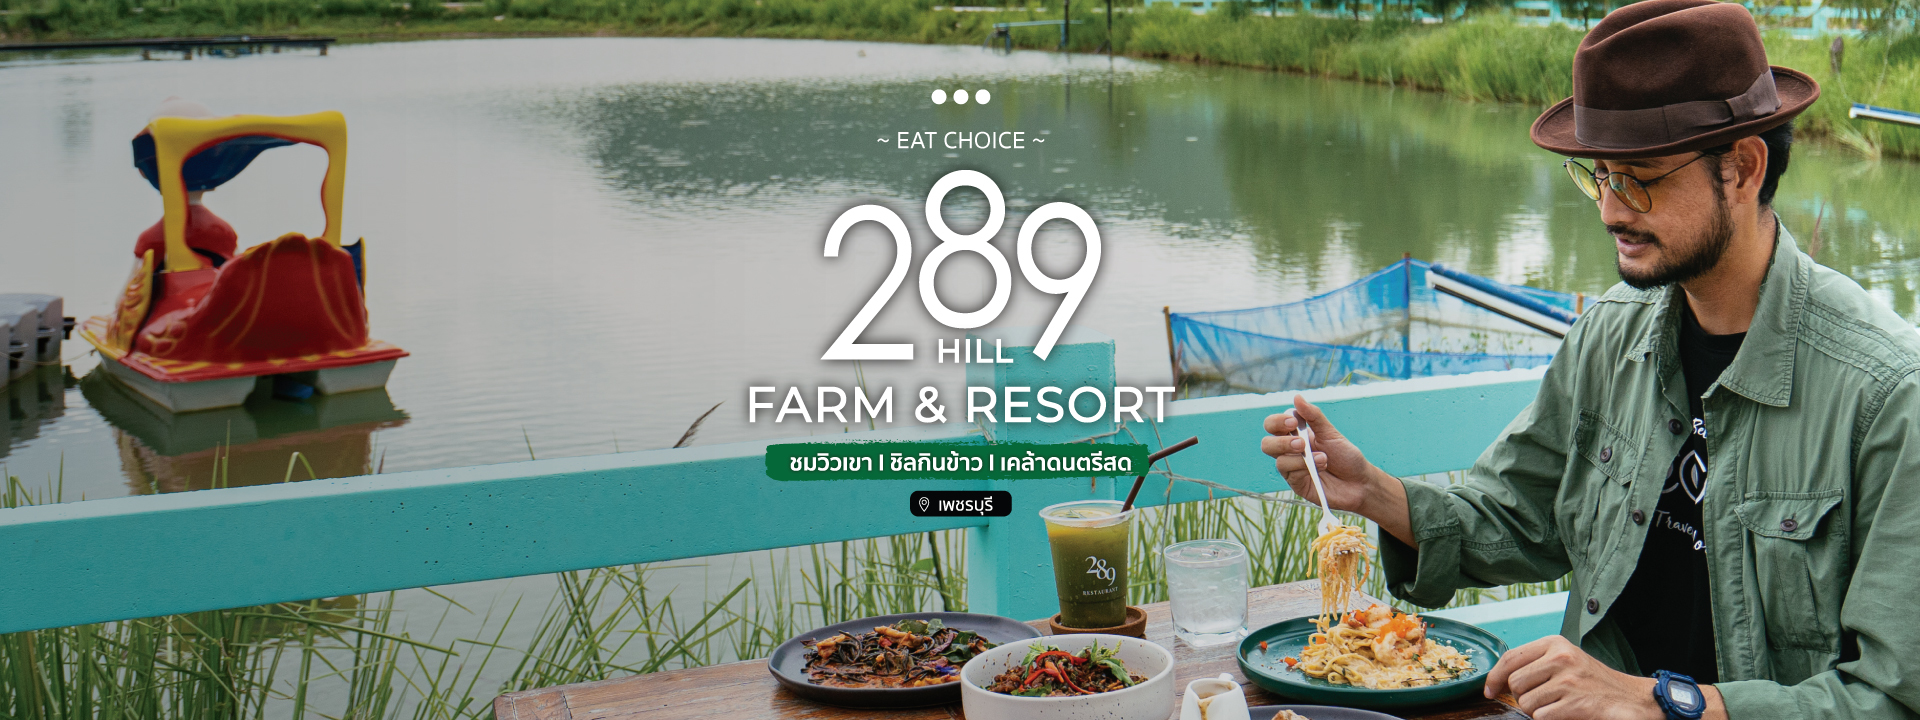 289 Hill Farm Restaurant & Resort…ชมวิวเขา l ชิลกินข้าว l เคล้าดนตรีสด